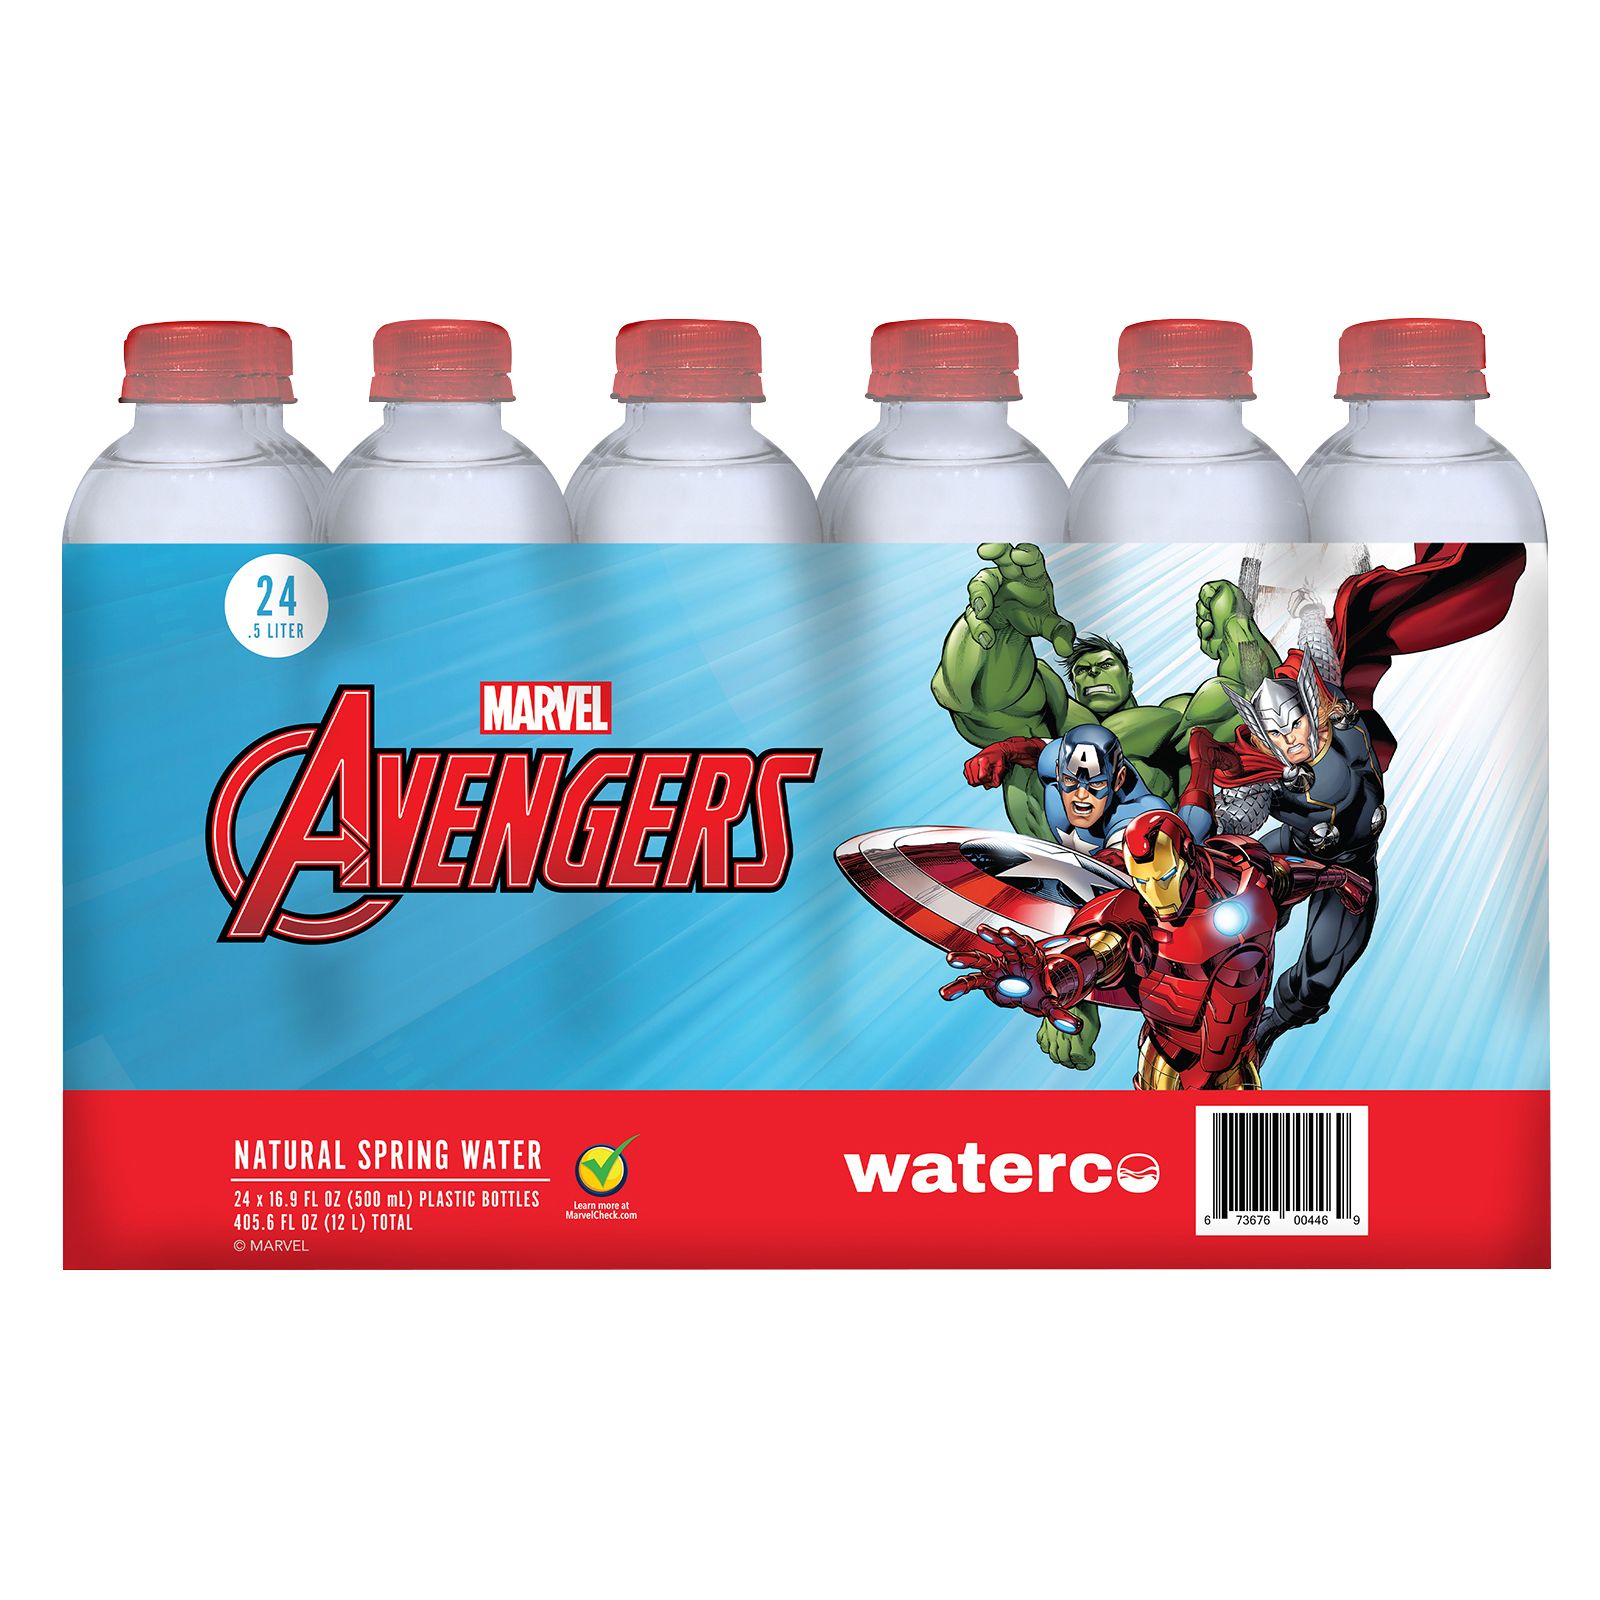 Iron Man Captain America Water Bottles - Buy Iron Man Captain